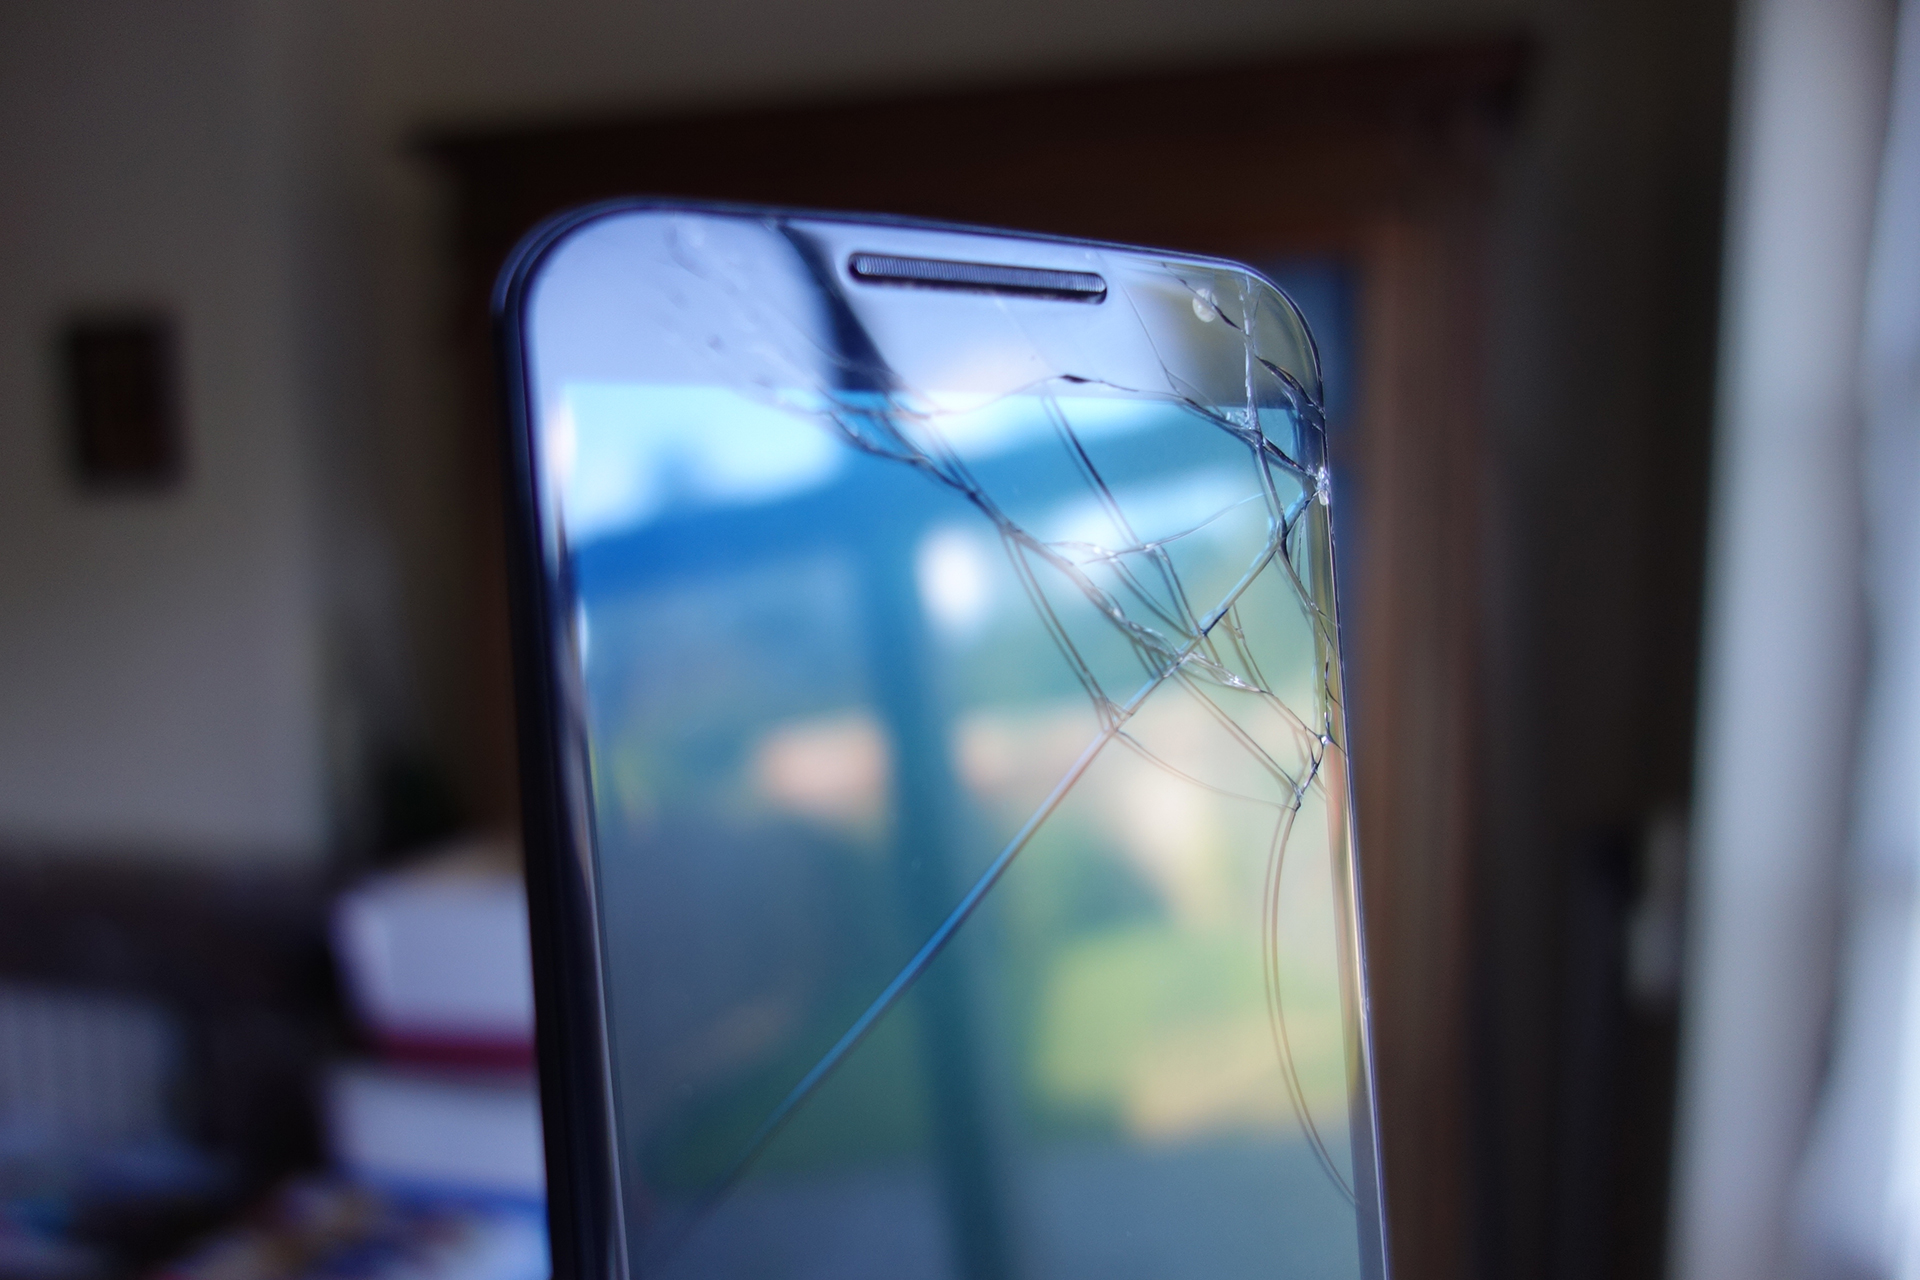 Экран в углу смартфона. Разбитый экран. Трещина на стекле. Трещина на стекле телефона. Трещина на экране смартфона.